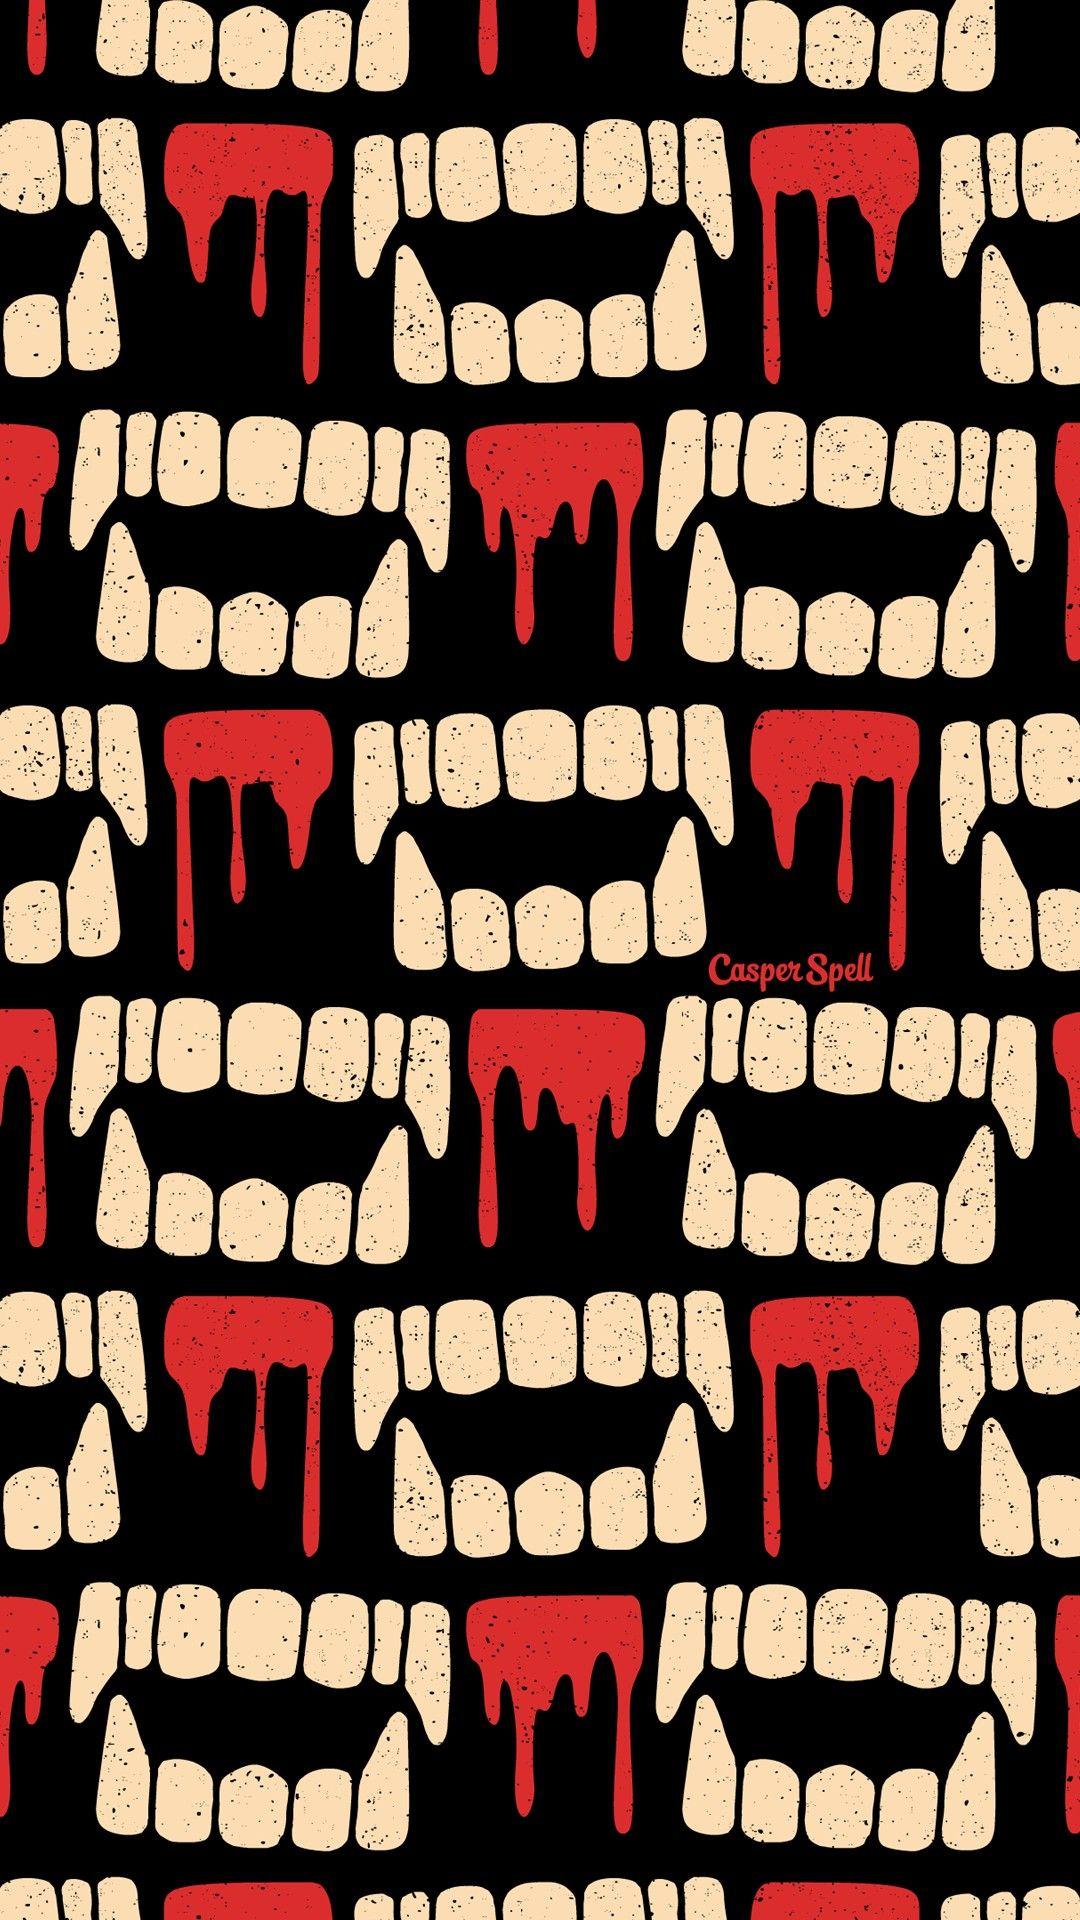 Vampire Teeth Repeat Pattern Wallpaper Halloween Cute Creepy Spooky Macabre Dark Art Illustration. Halloween wallpaper, Wallpaper vintage, Lock screen wallpaper